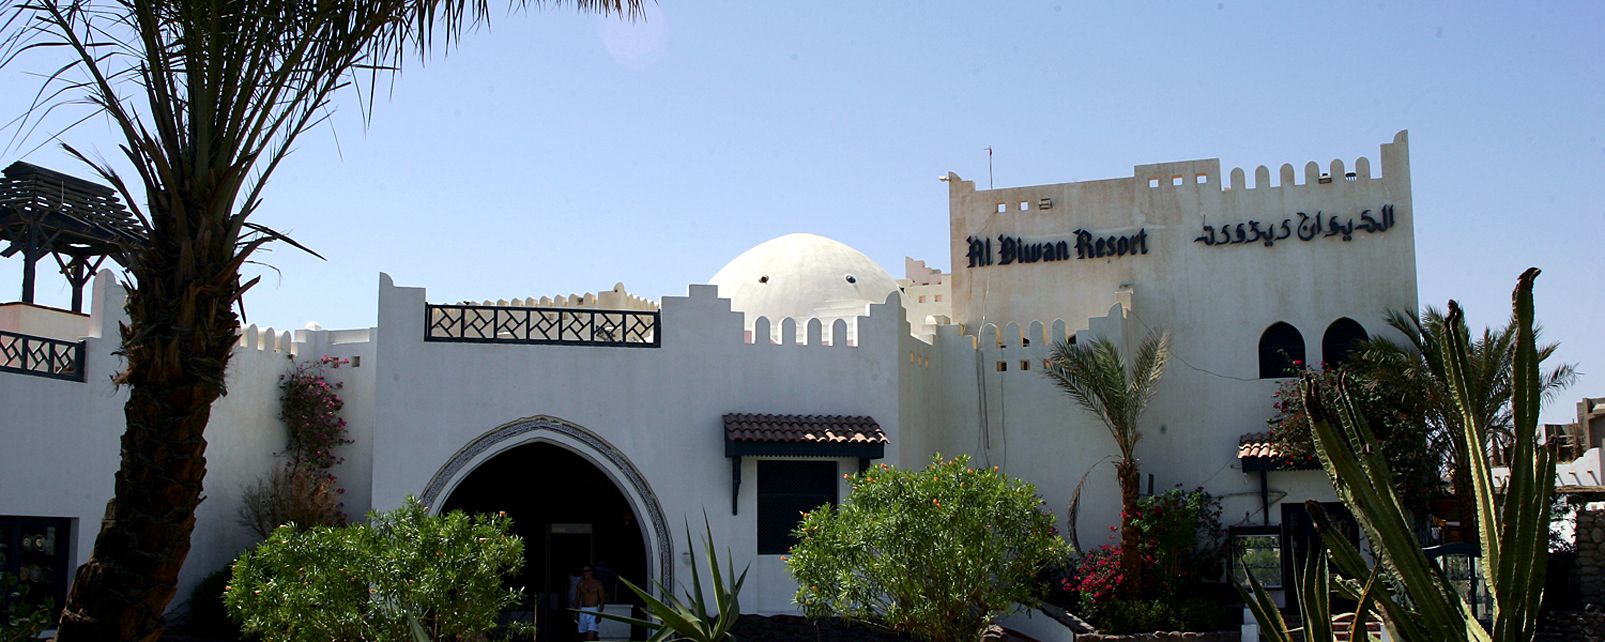 Hôtel Al Diwan Resort